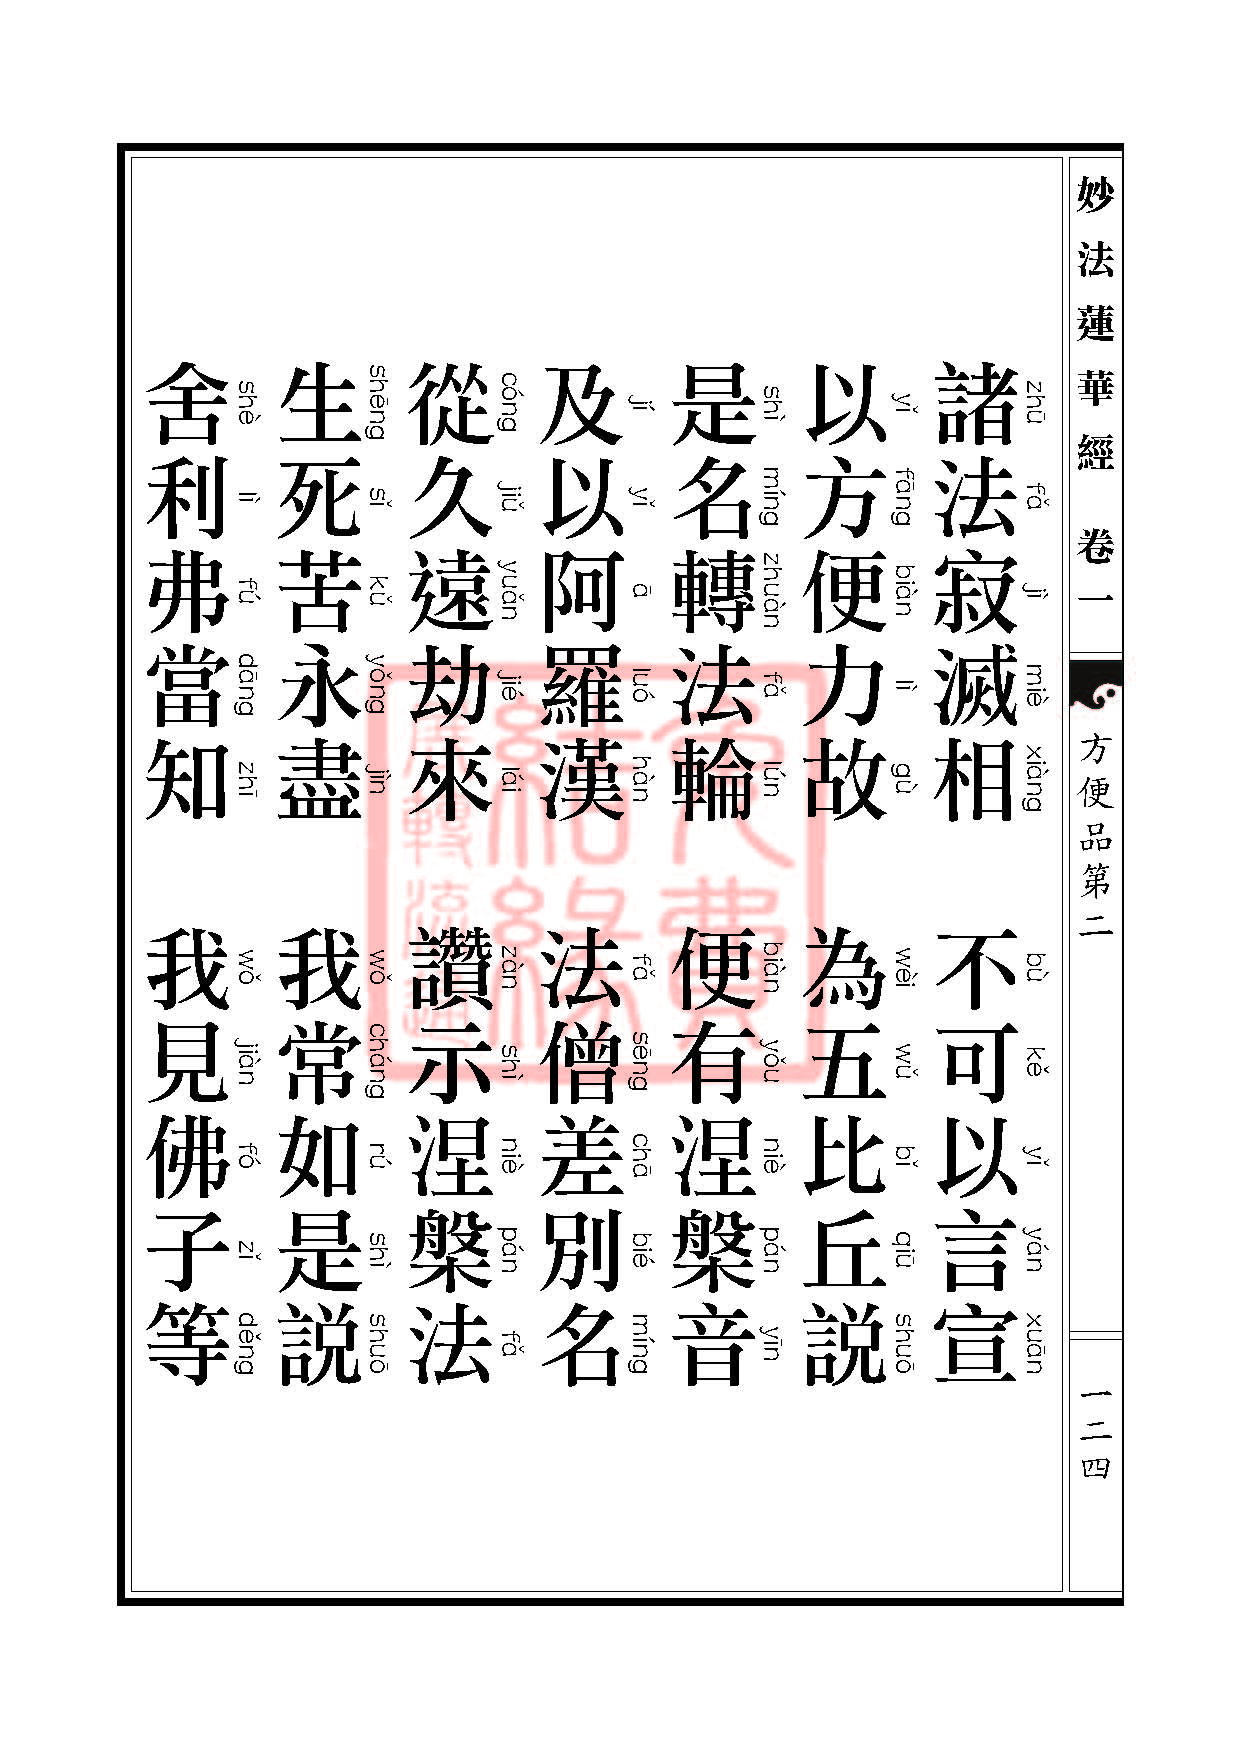 Book_FHJ_HK-A6-PY_Web_页面_124.jpg